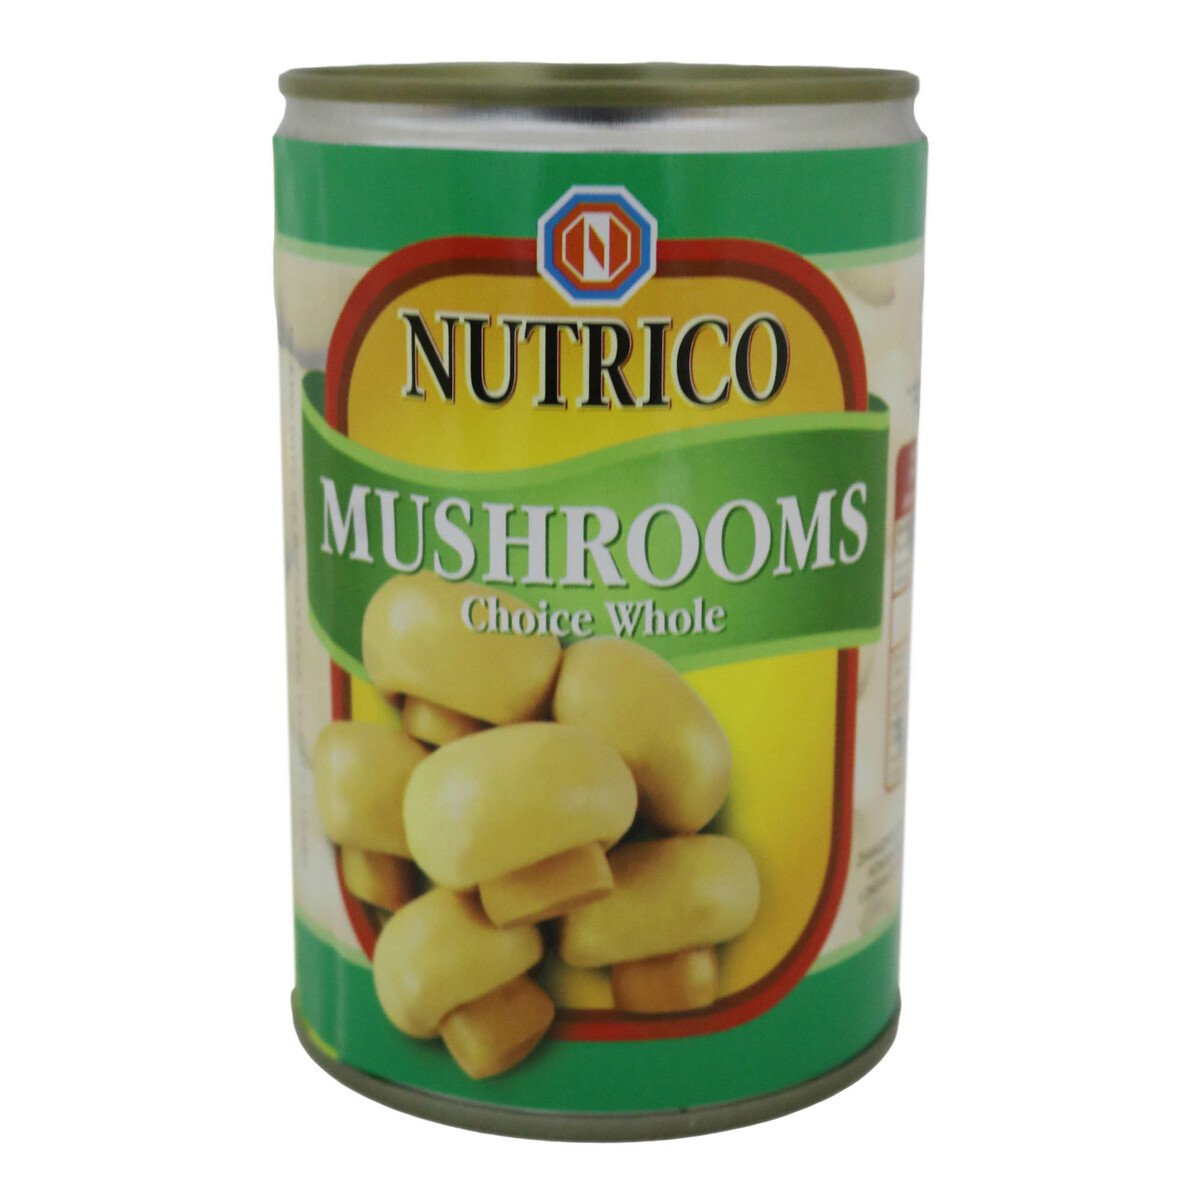 Nutrico Mushroom 425g